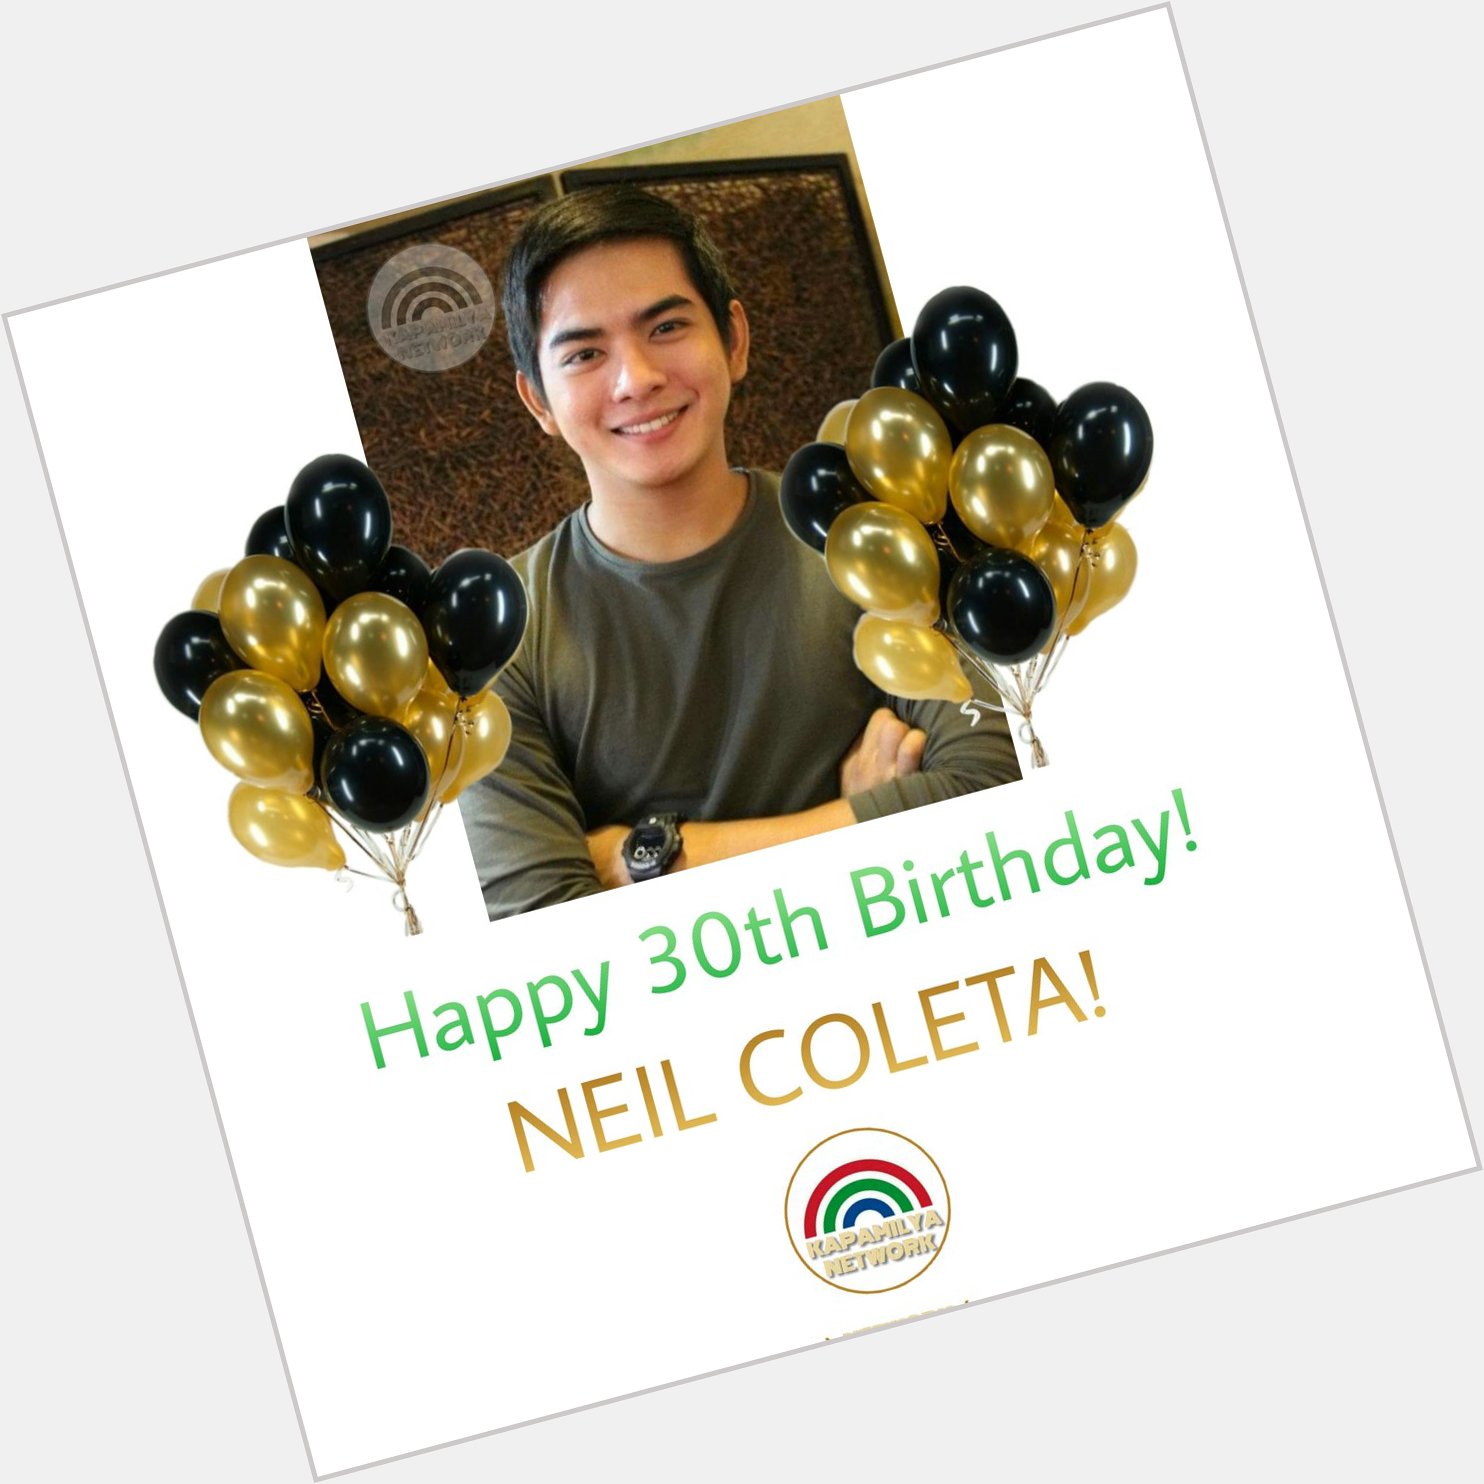 Happy 30th Birthday! Neil Coleta!!! 